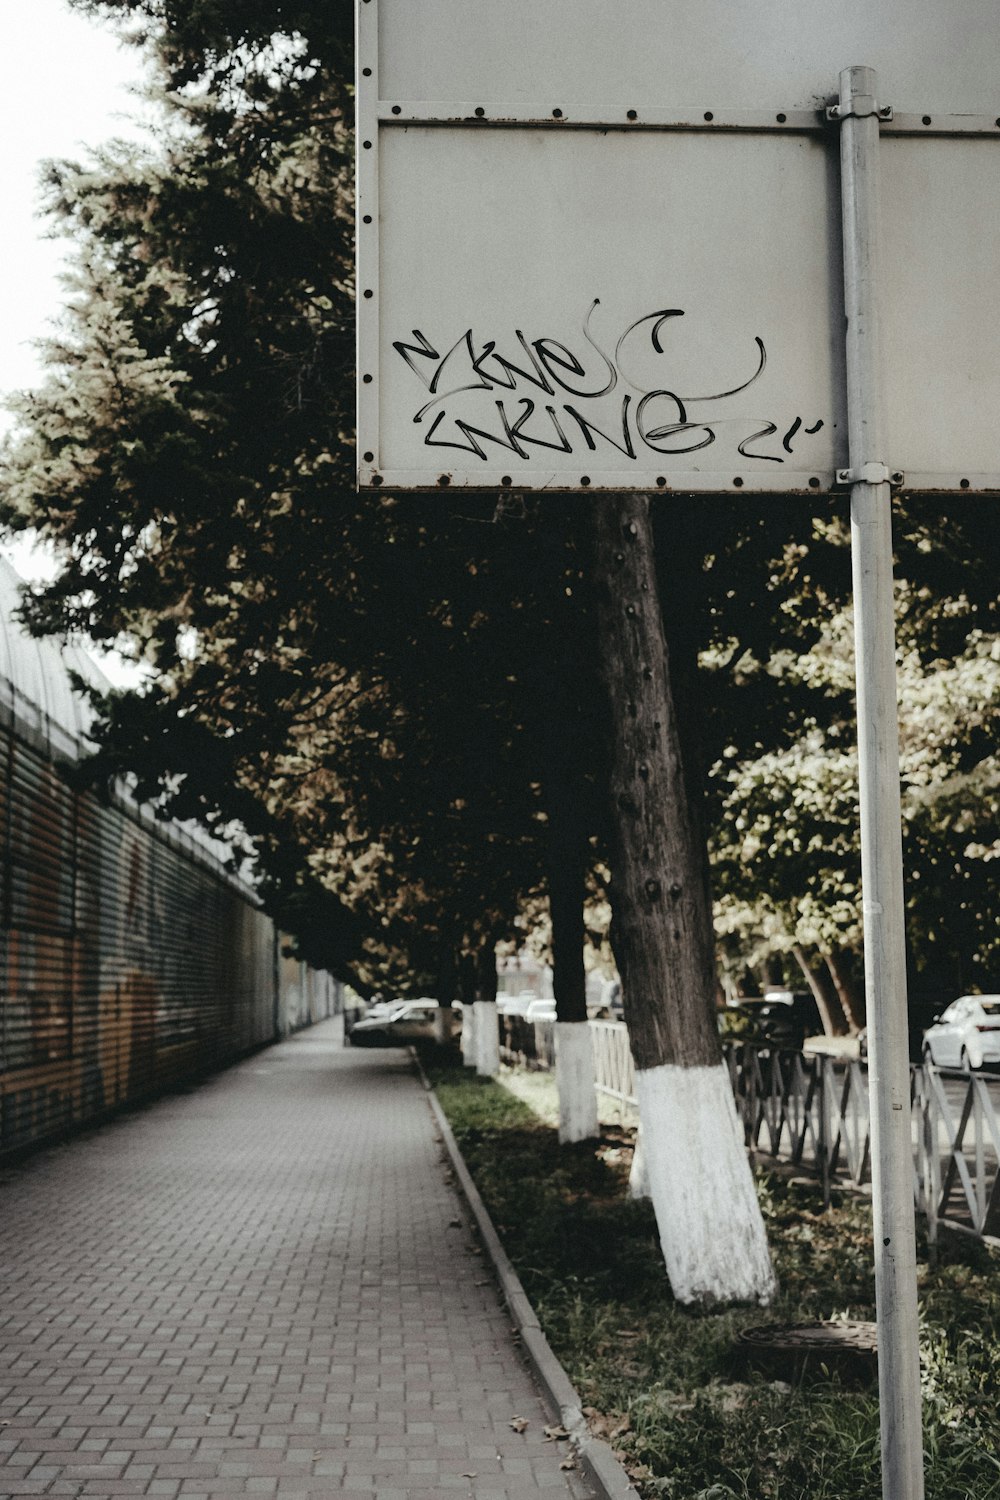 a street sign that has graffiti on it